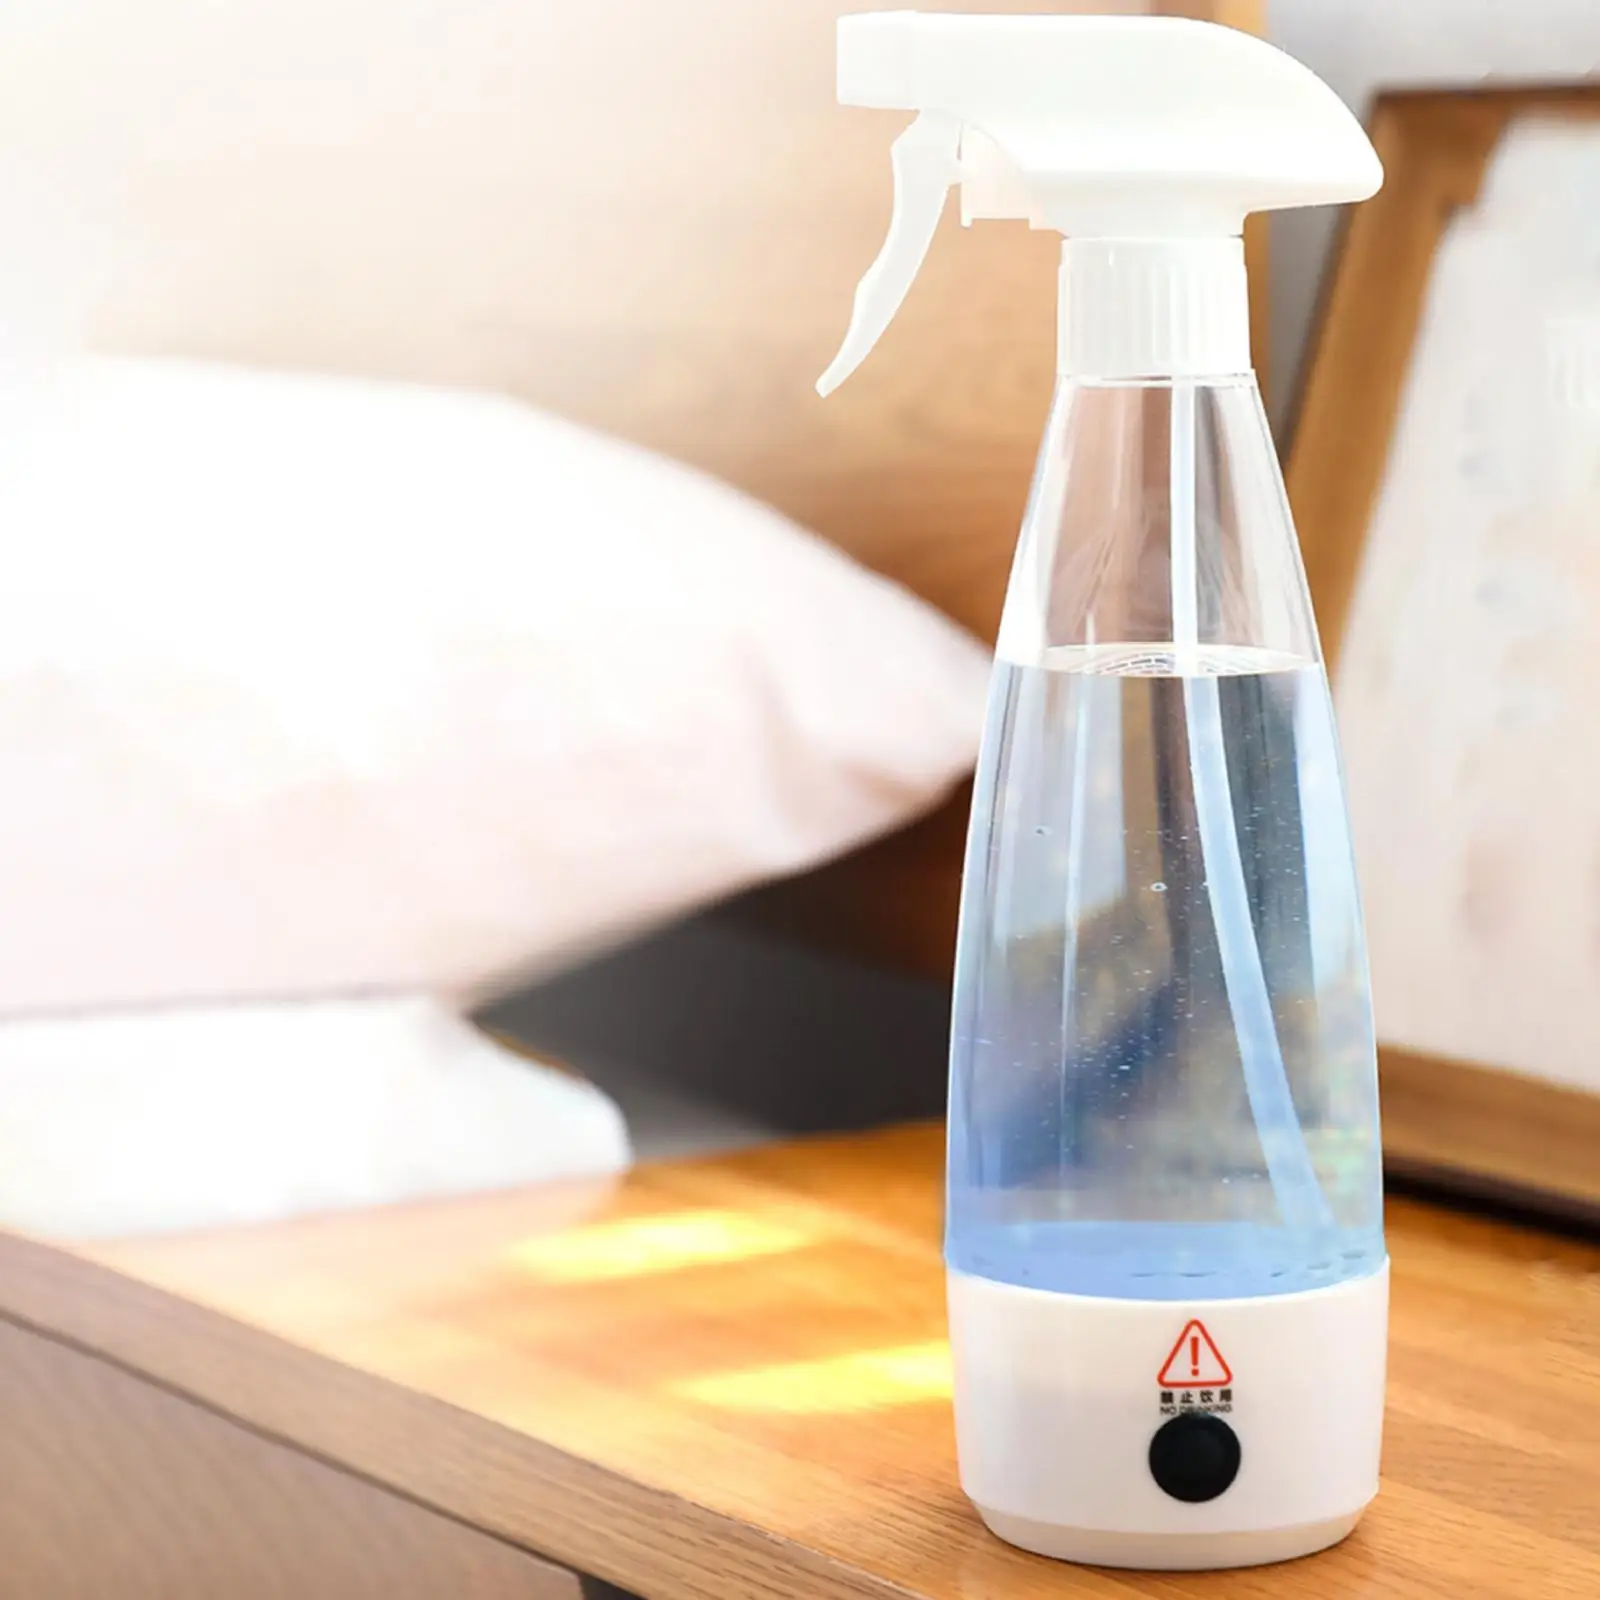 Portable Detergent Spray Bottle Household Cleaning water Bottle 350ml Refill Empty for Bathroom Toilet Home Living Room